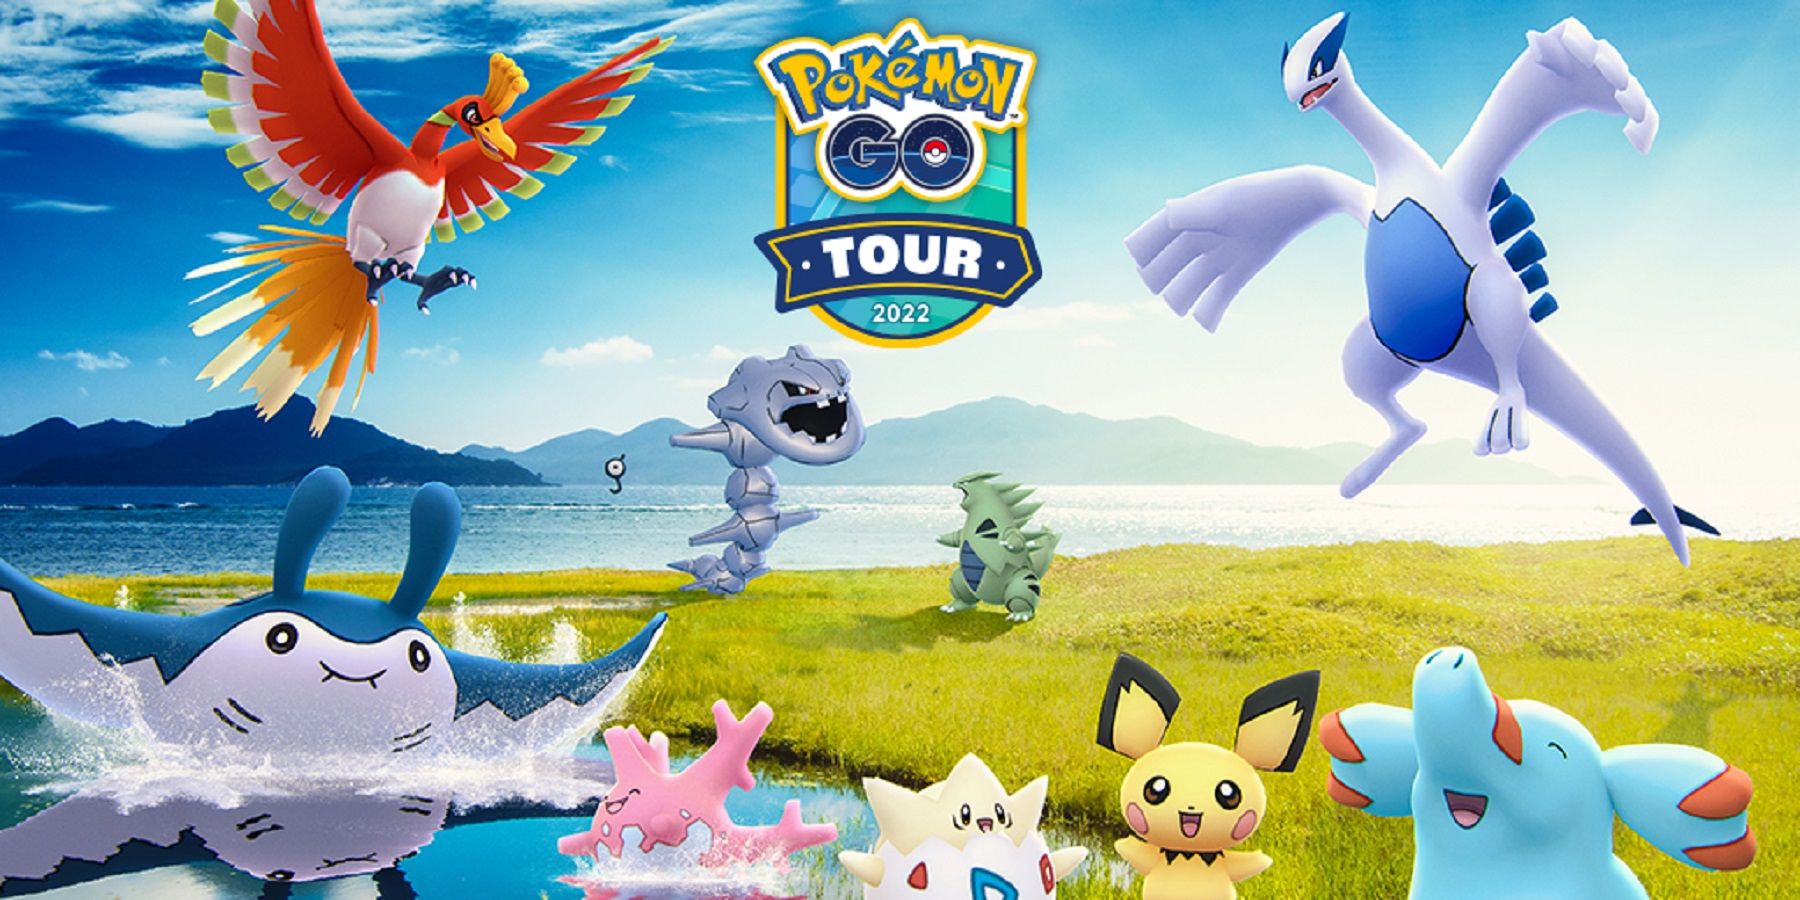 Pokemon GO Tour: Johto Rotating Habitat Themes and Times